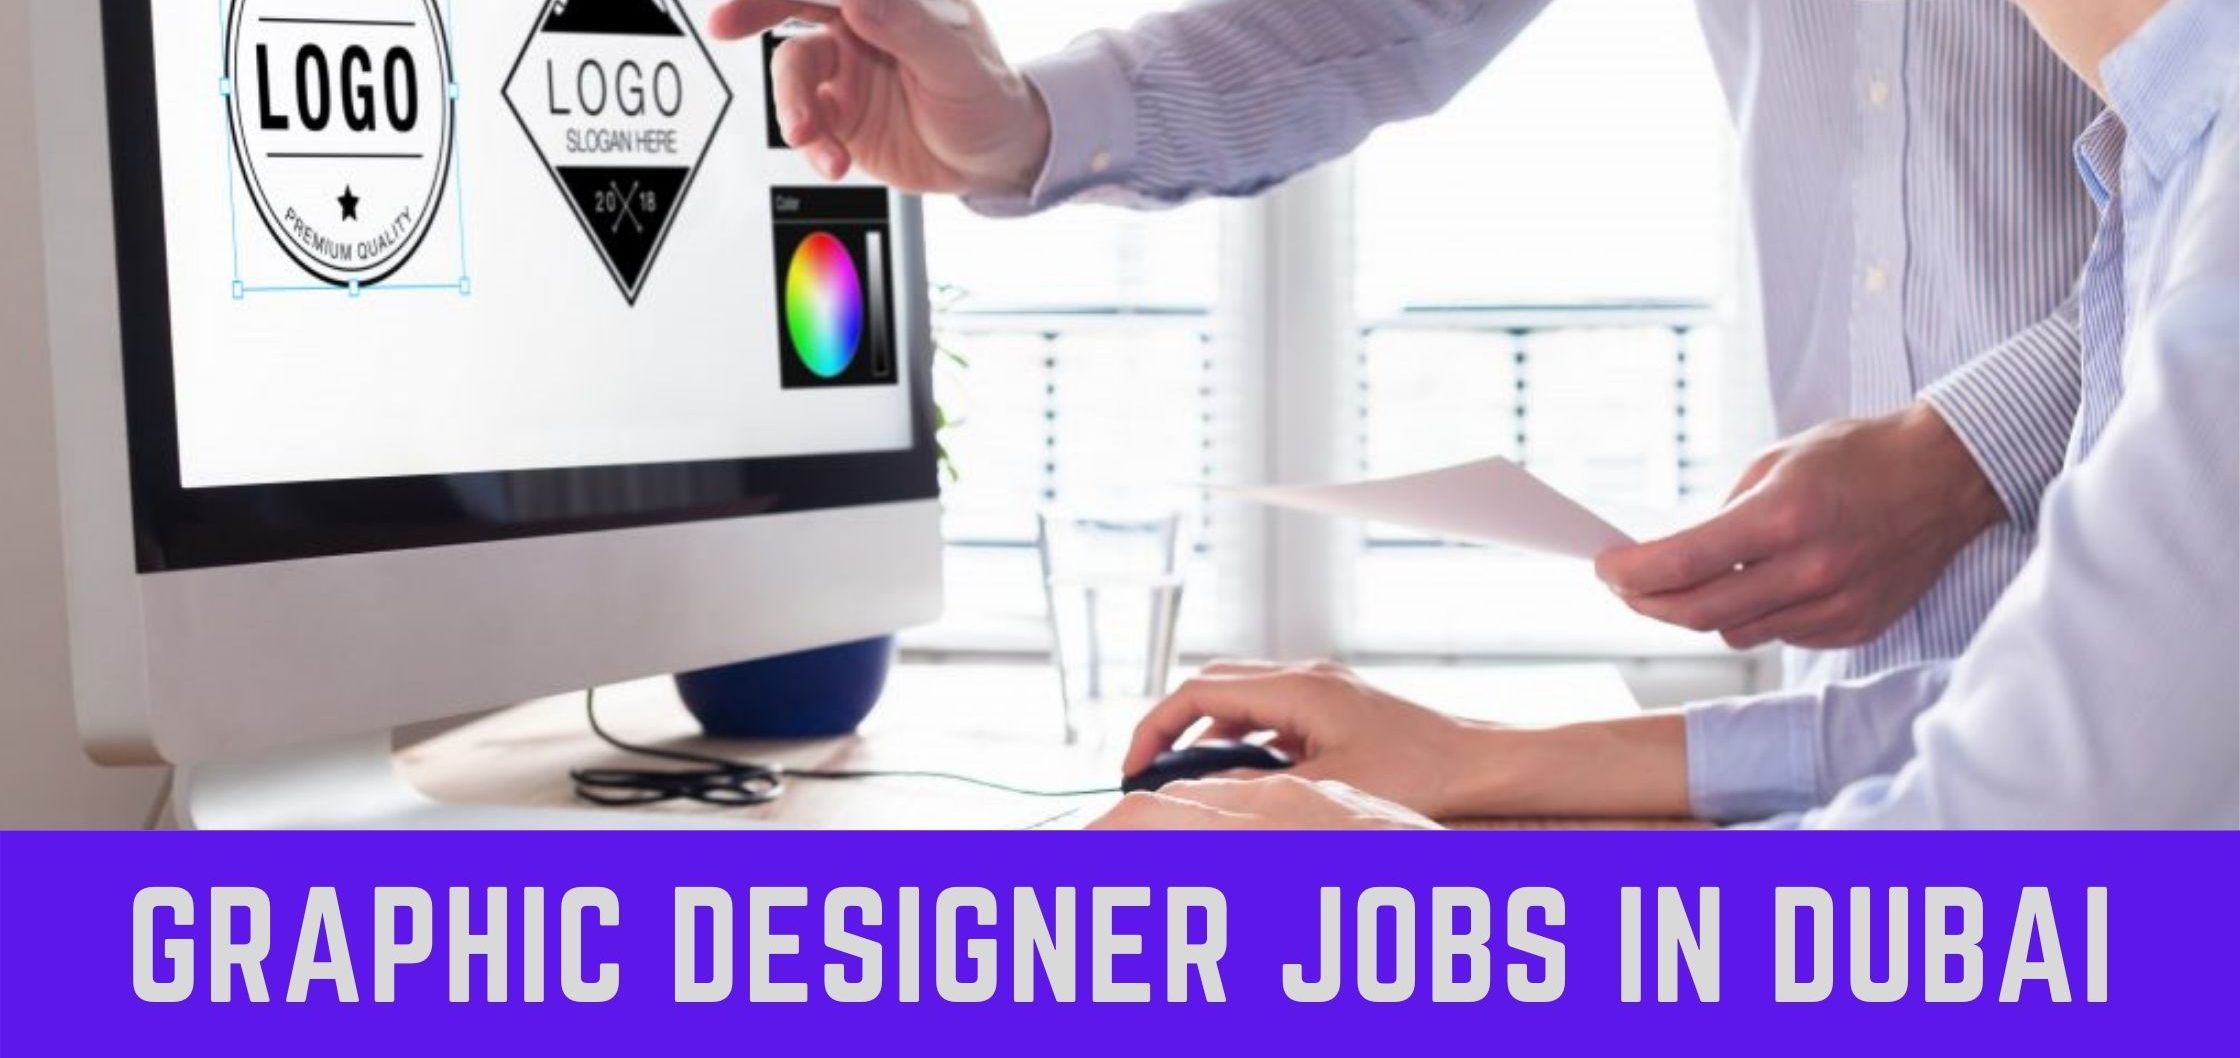 graphic designer jobs in dubai for freshers e1660227177200